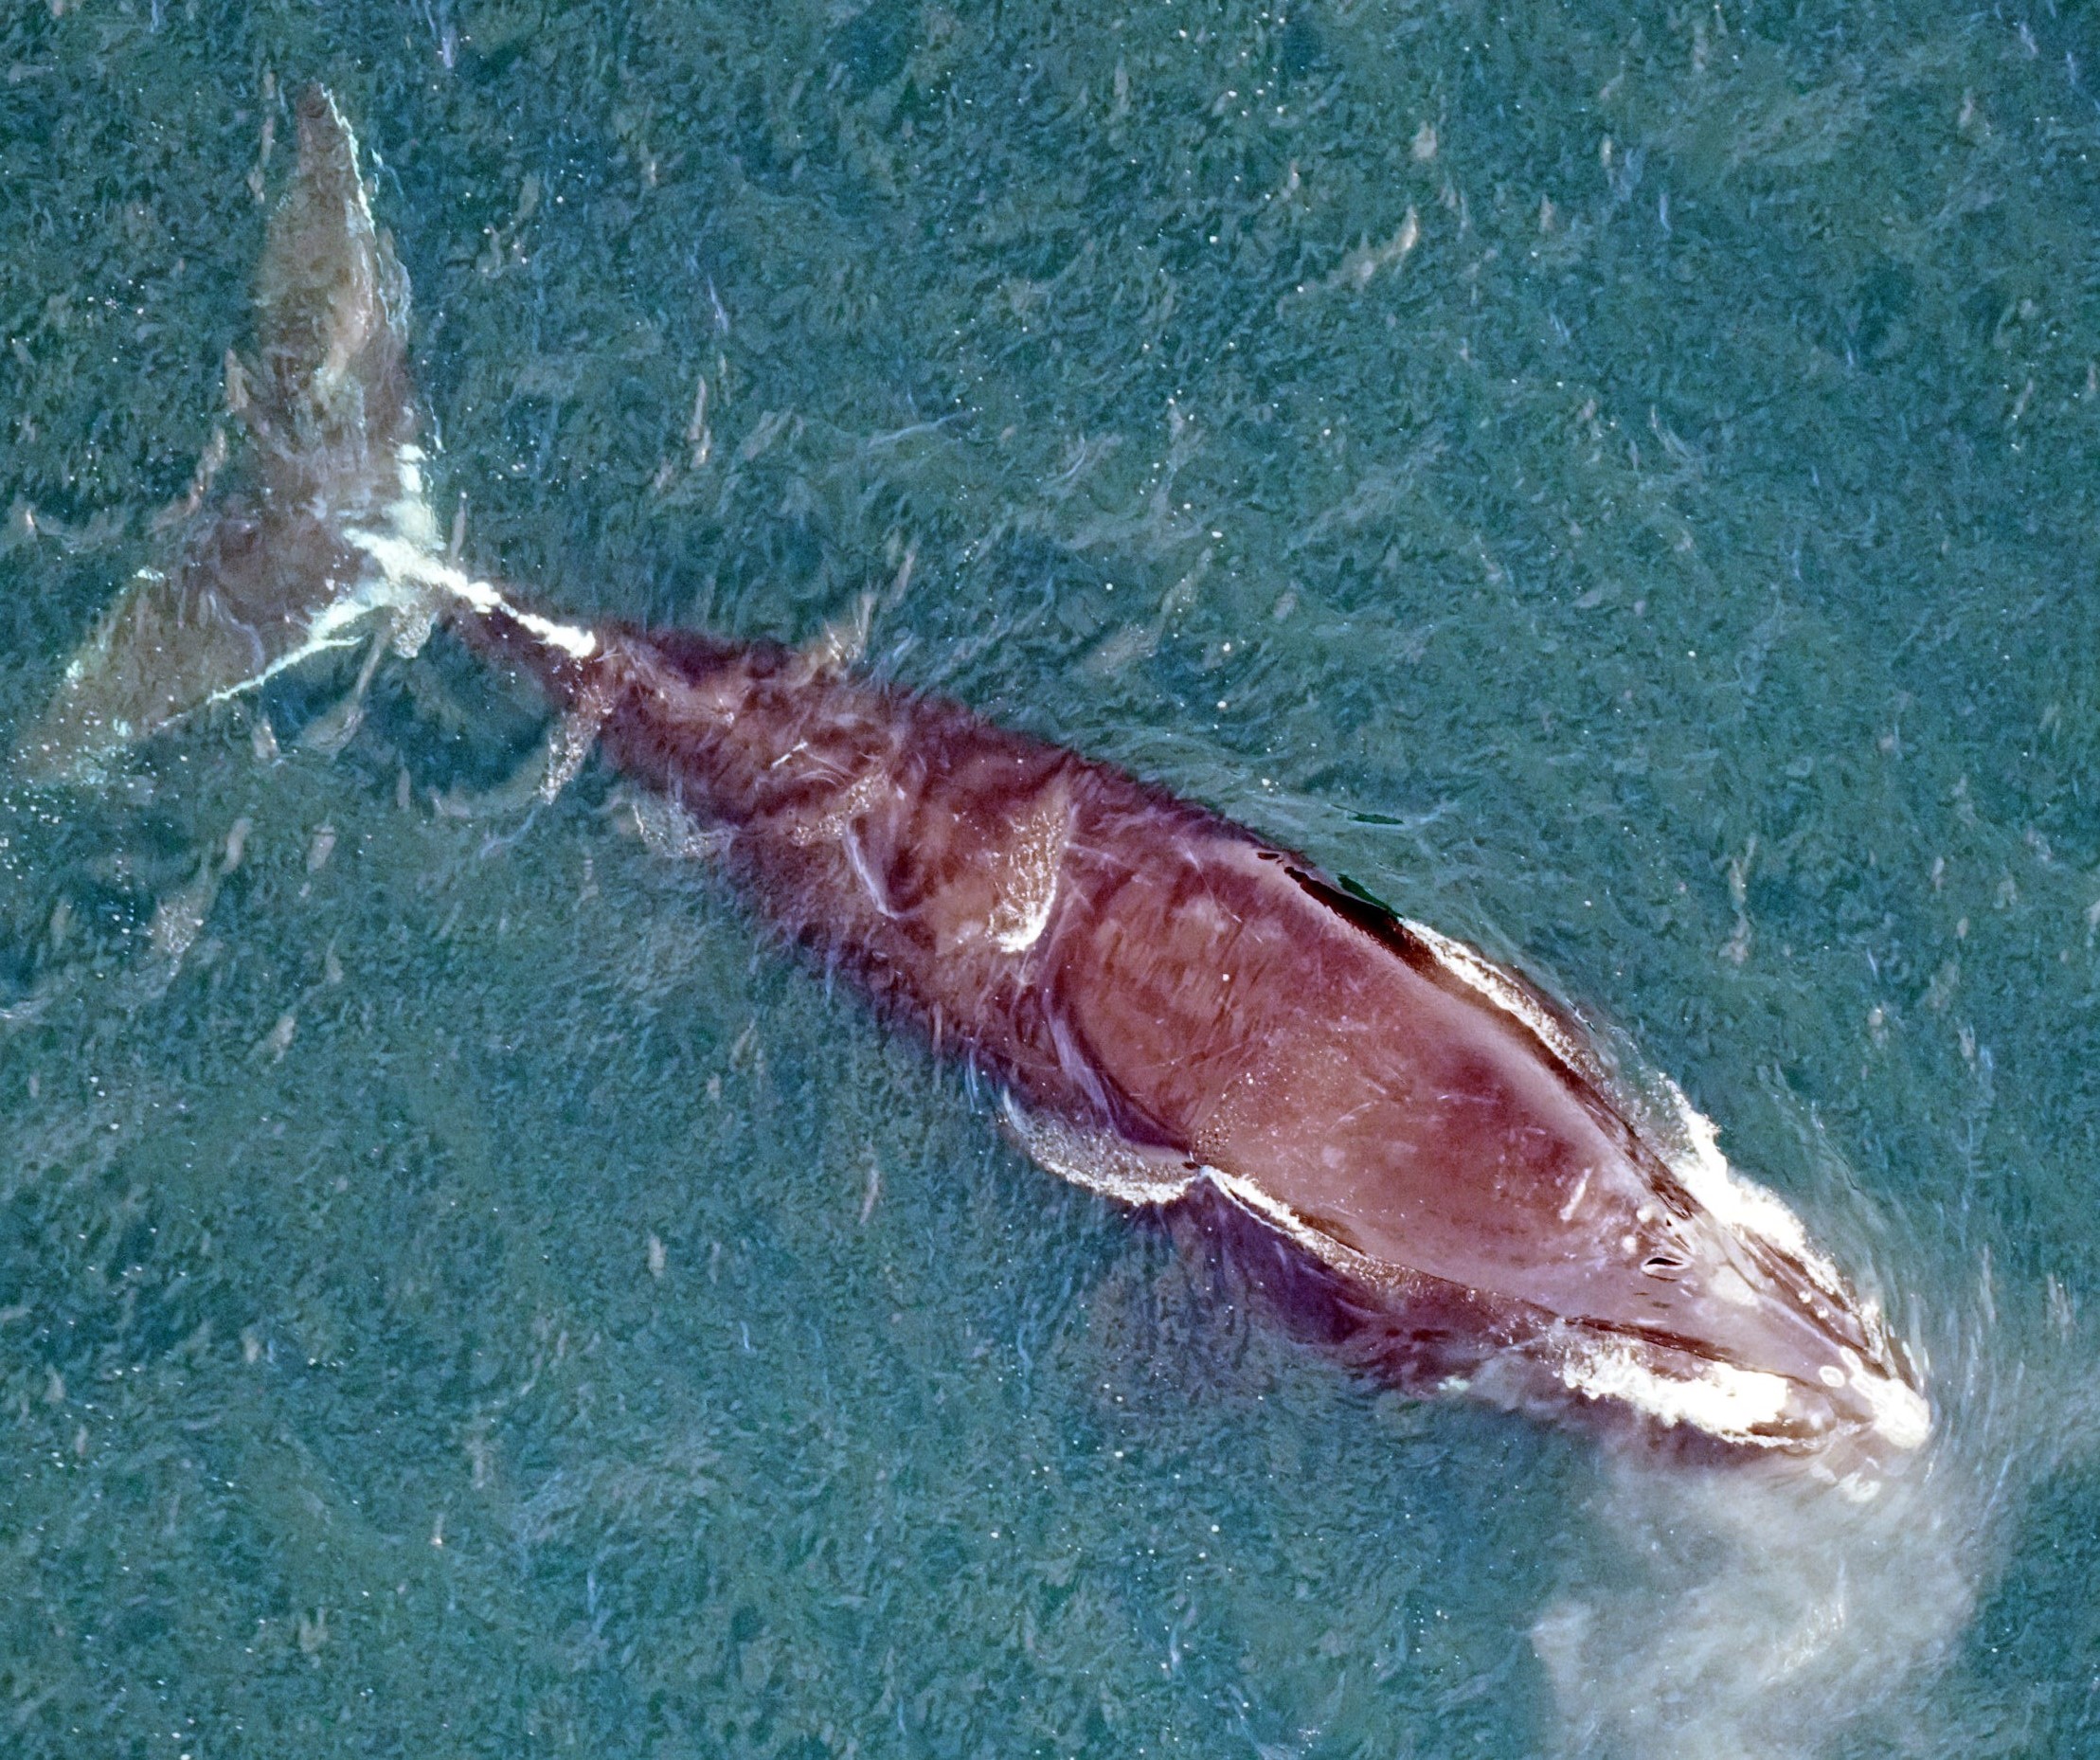 North Atlantic Right Whale Calf Stranded Dead in Florida